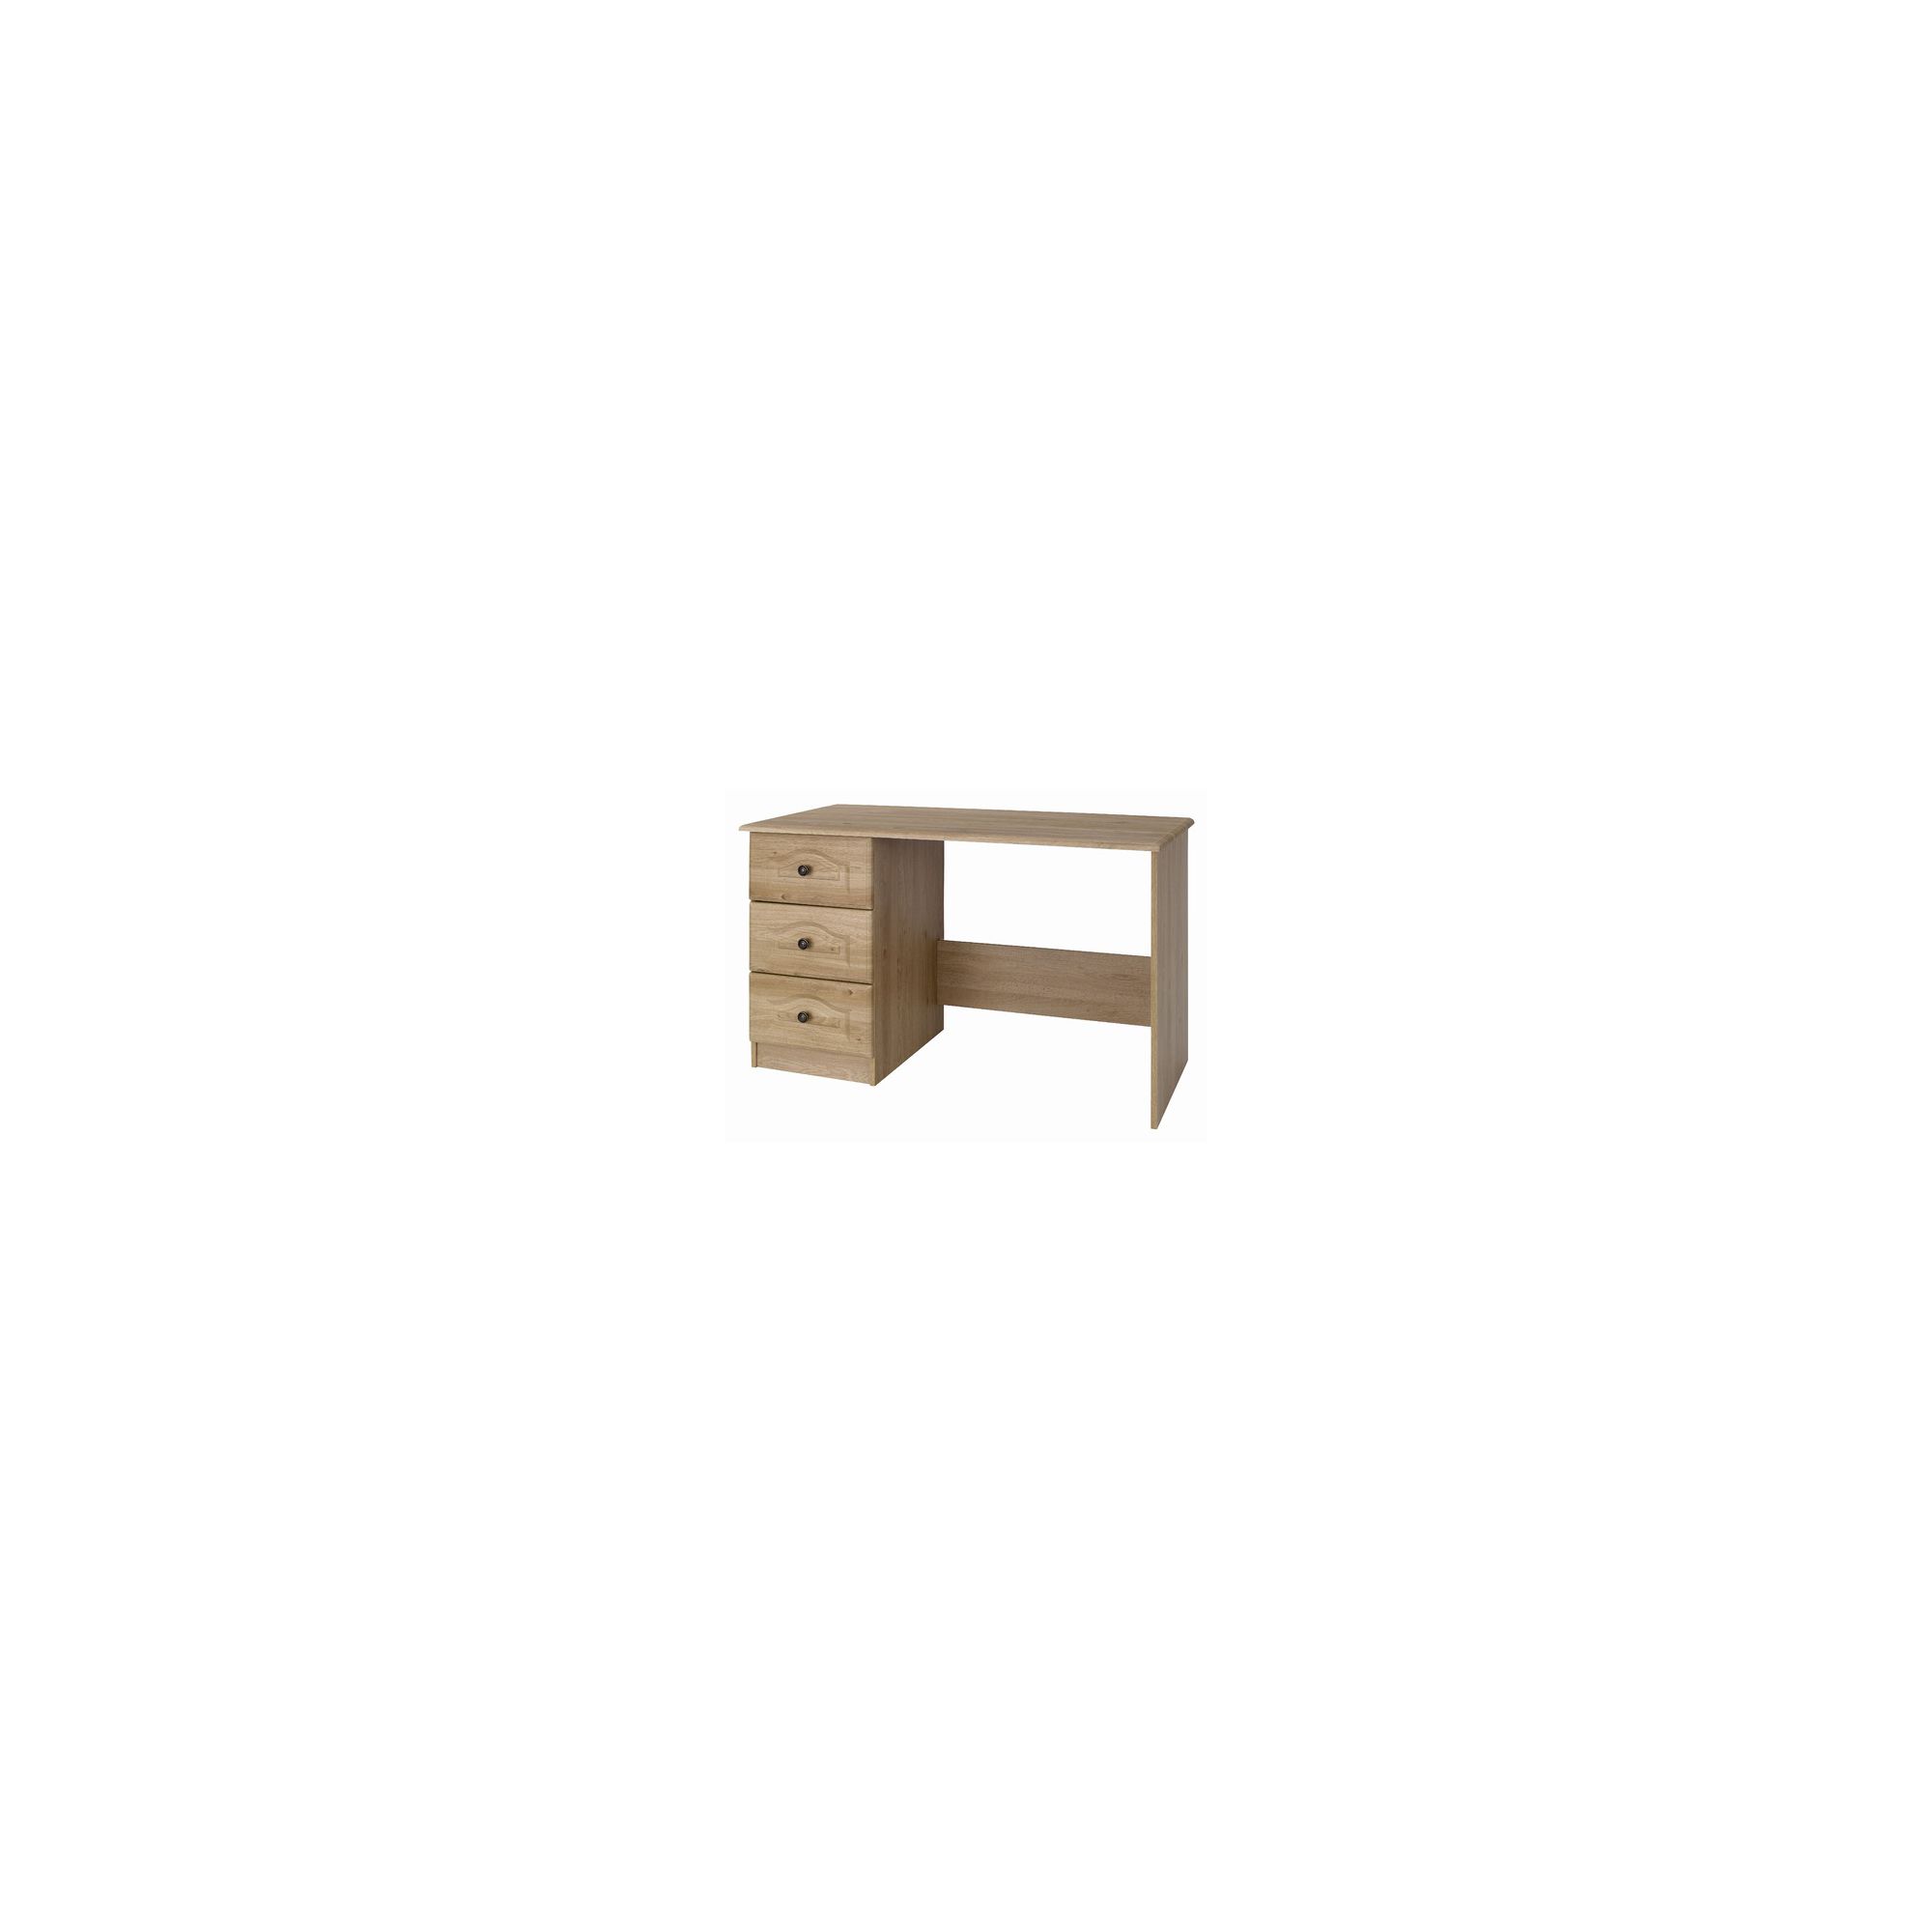 Alto Furniture Visualise Bordeaux Dressing Table in Oak at Tesco Direct